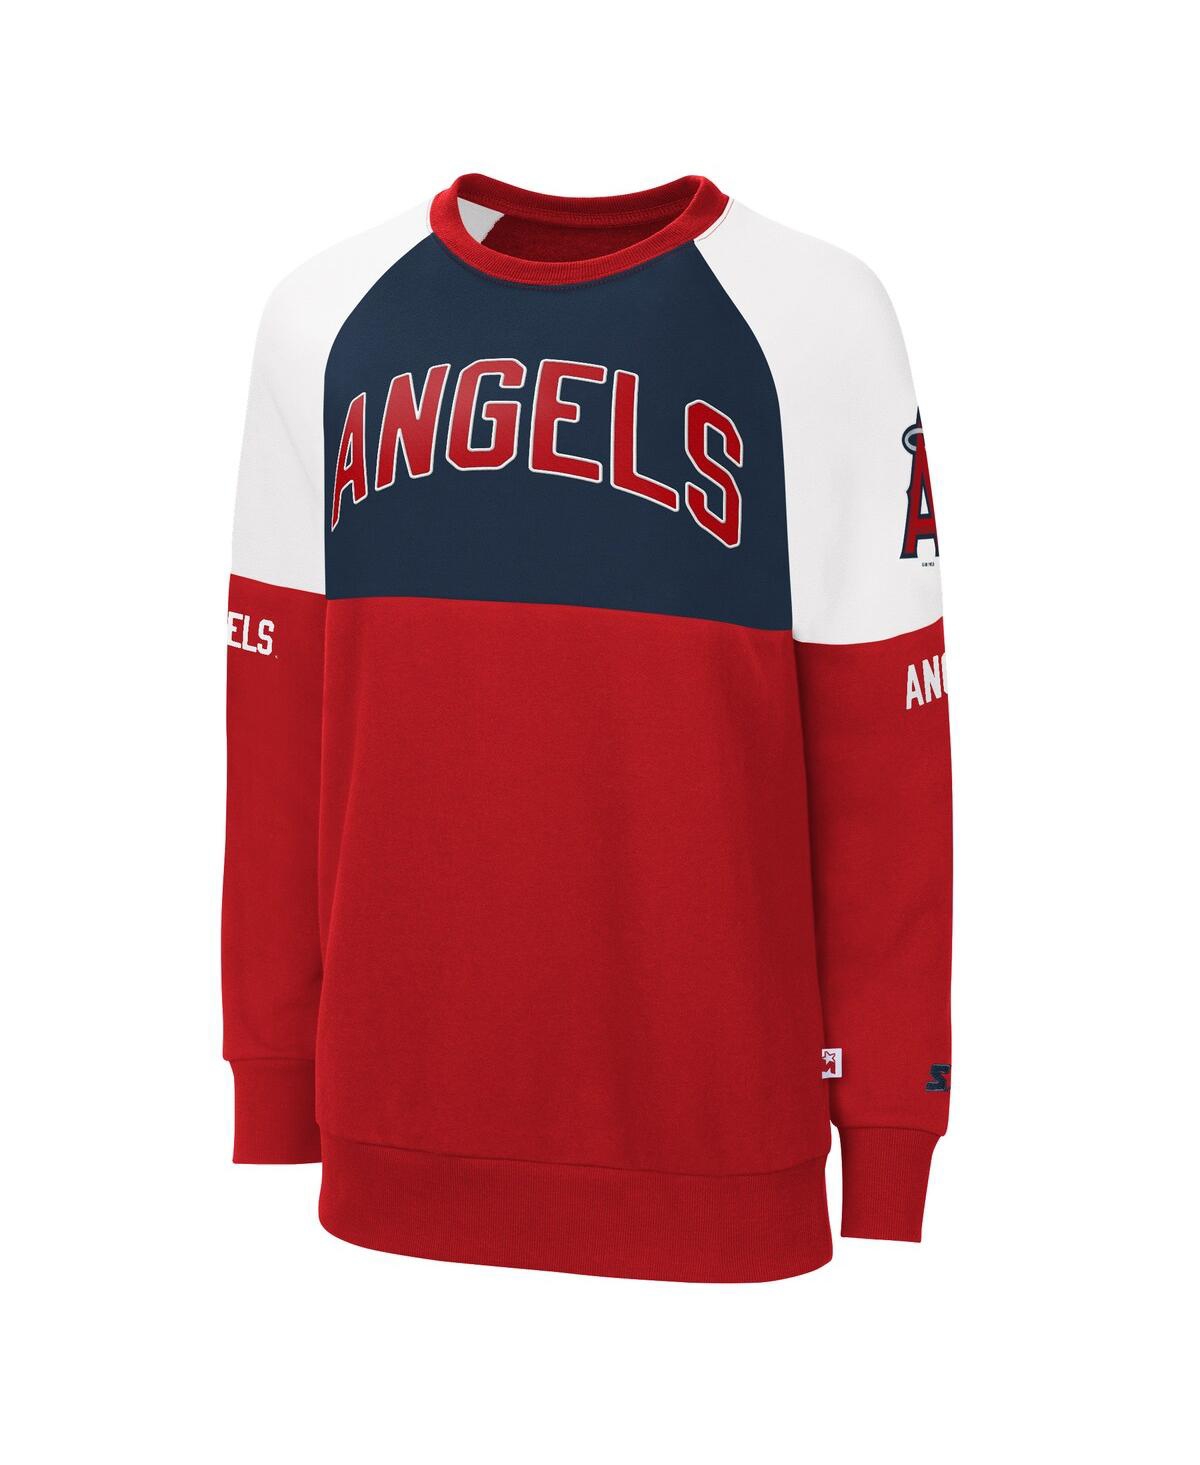 Women's Starter Red, Navy Los Angeles Angels Baseline Raglan Pullover Sweatshirt - Red, Navy